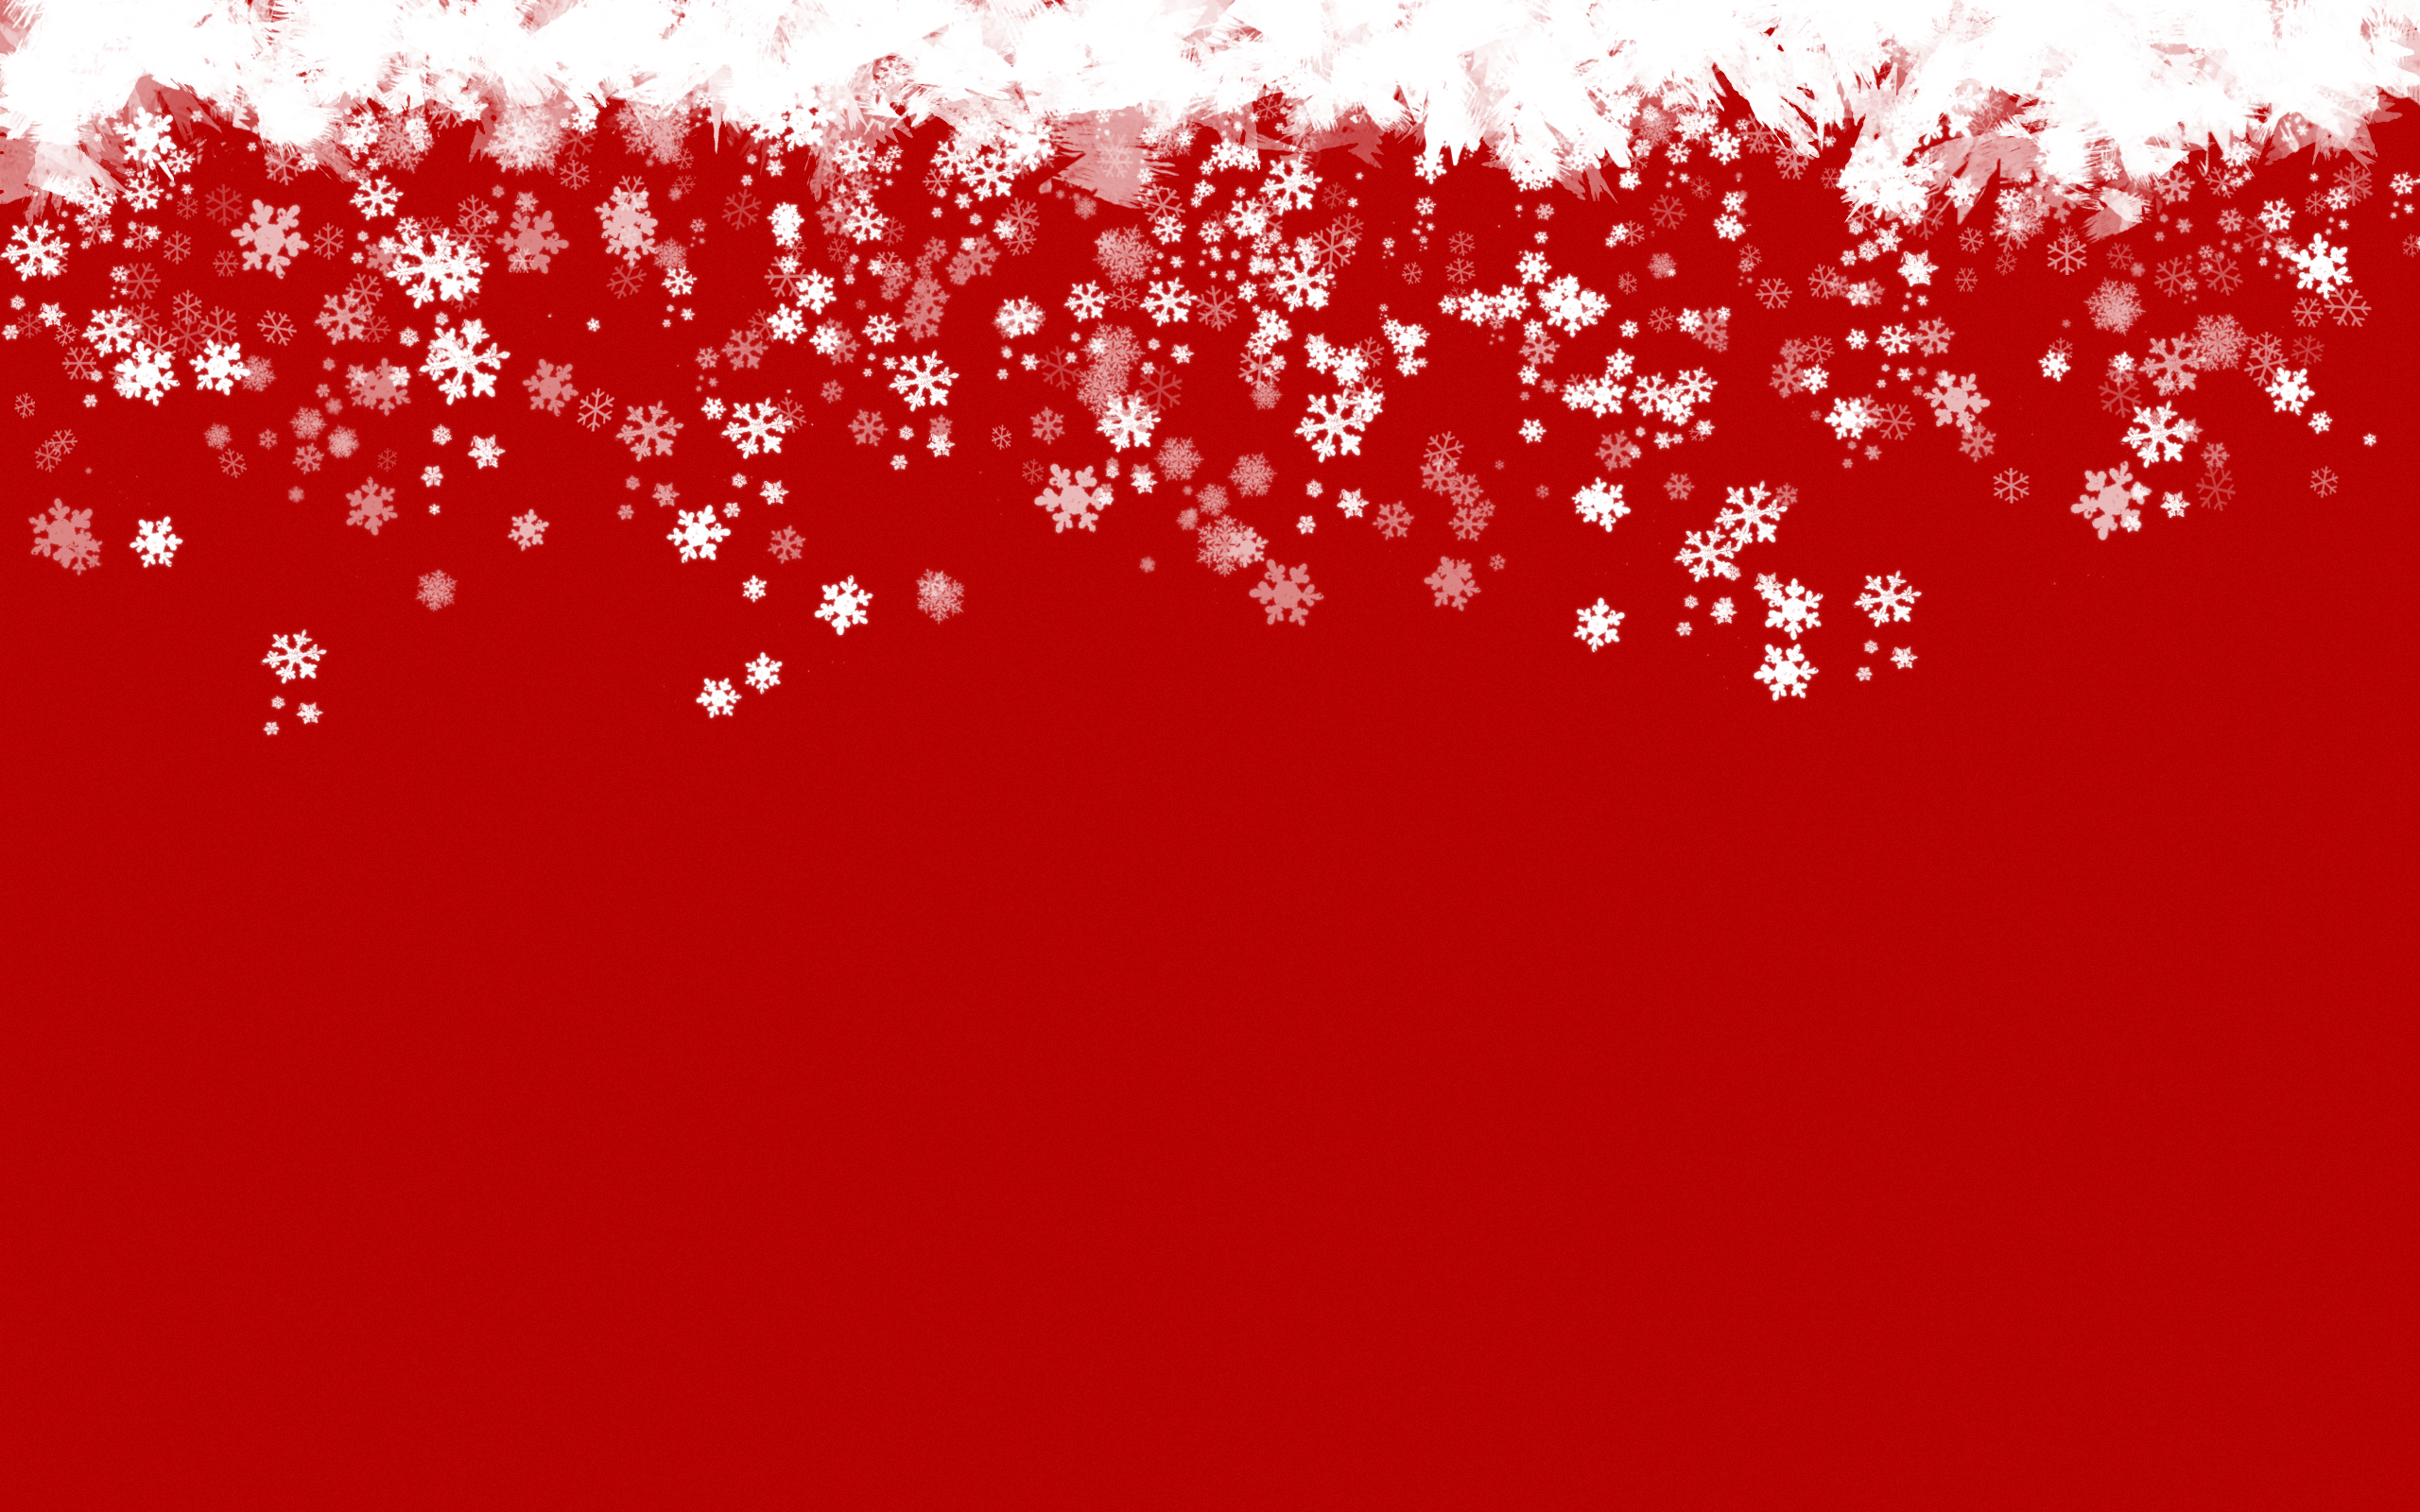 Christmas Red Black and White Wallpaper. Christmas Wallpaper, Beautiful Christmas Wallpaper and Awesome Christmas Wallpaper